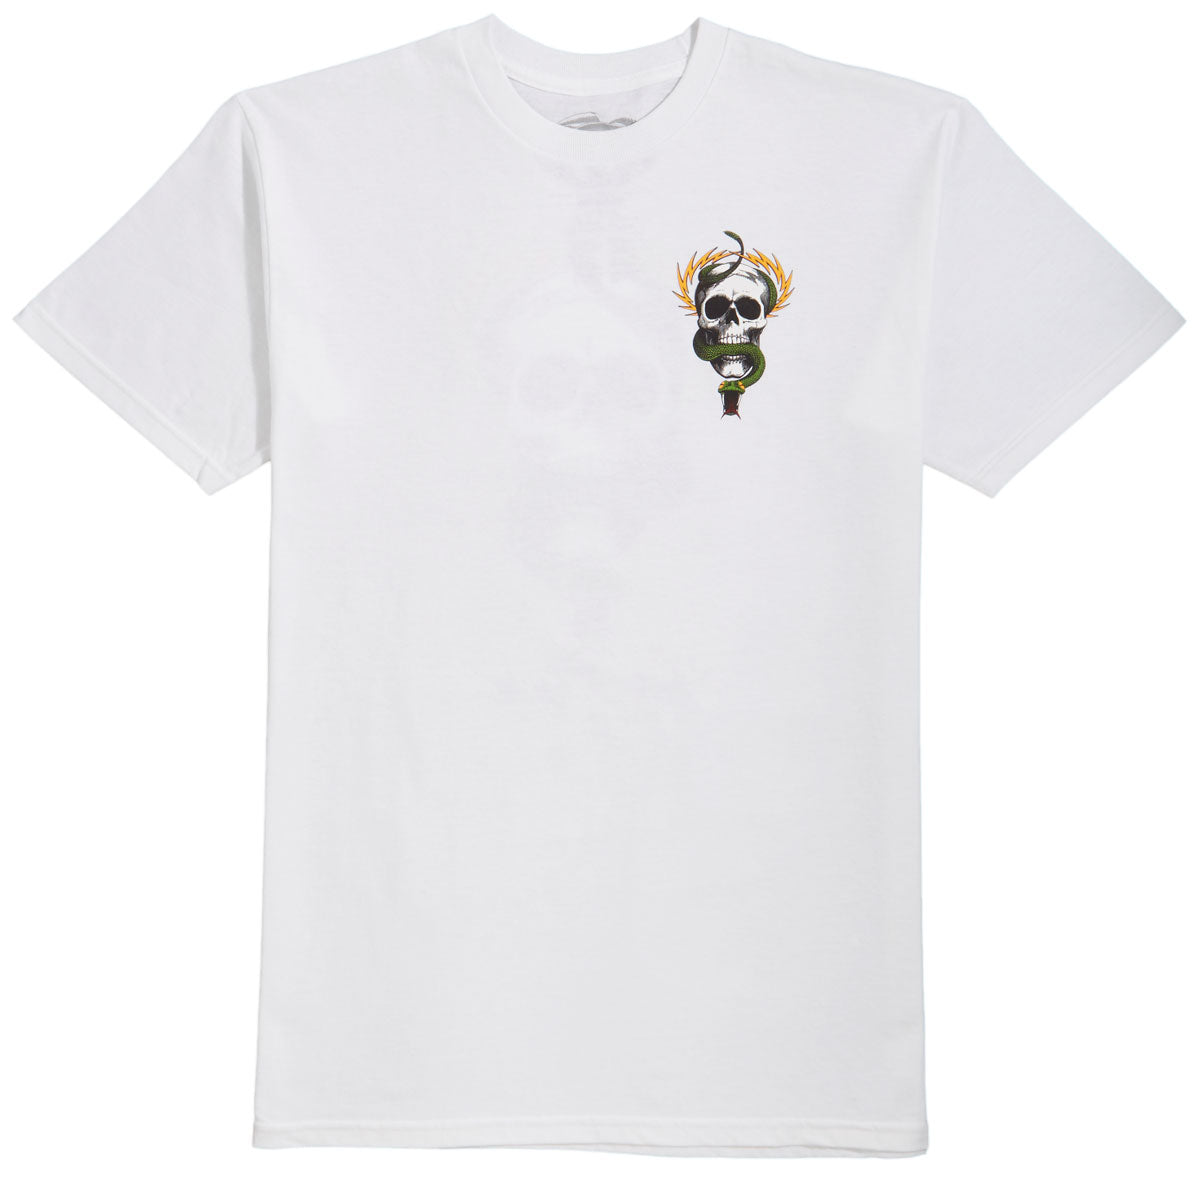 Powell-Peralta McGill Skull and Snake T-Shirt - White image 1